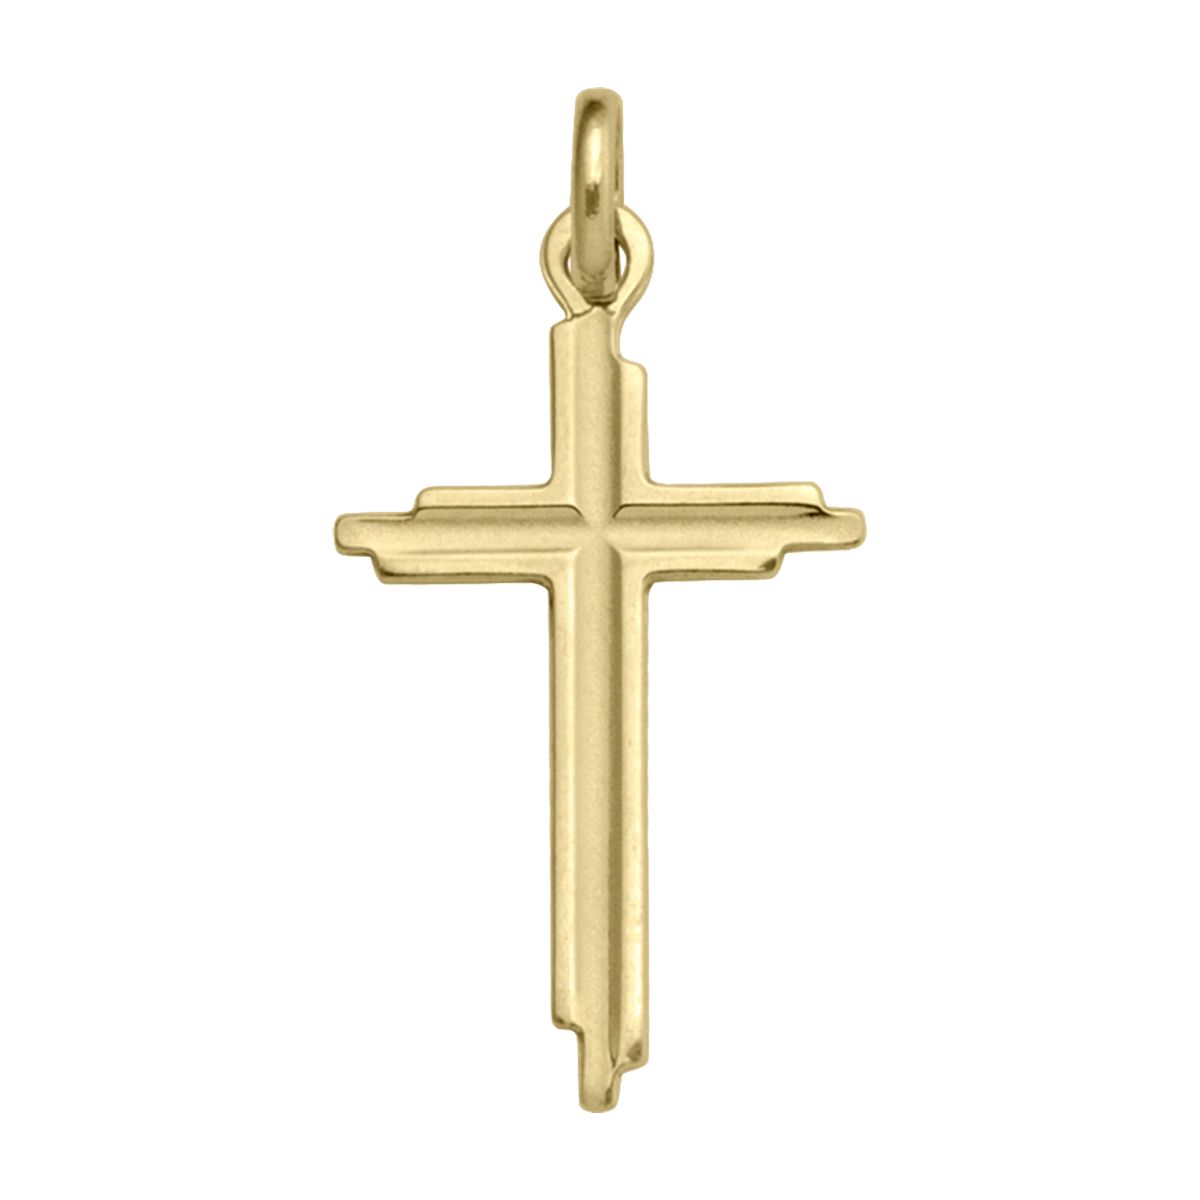 X0412, Gold Cross, Concave Design